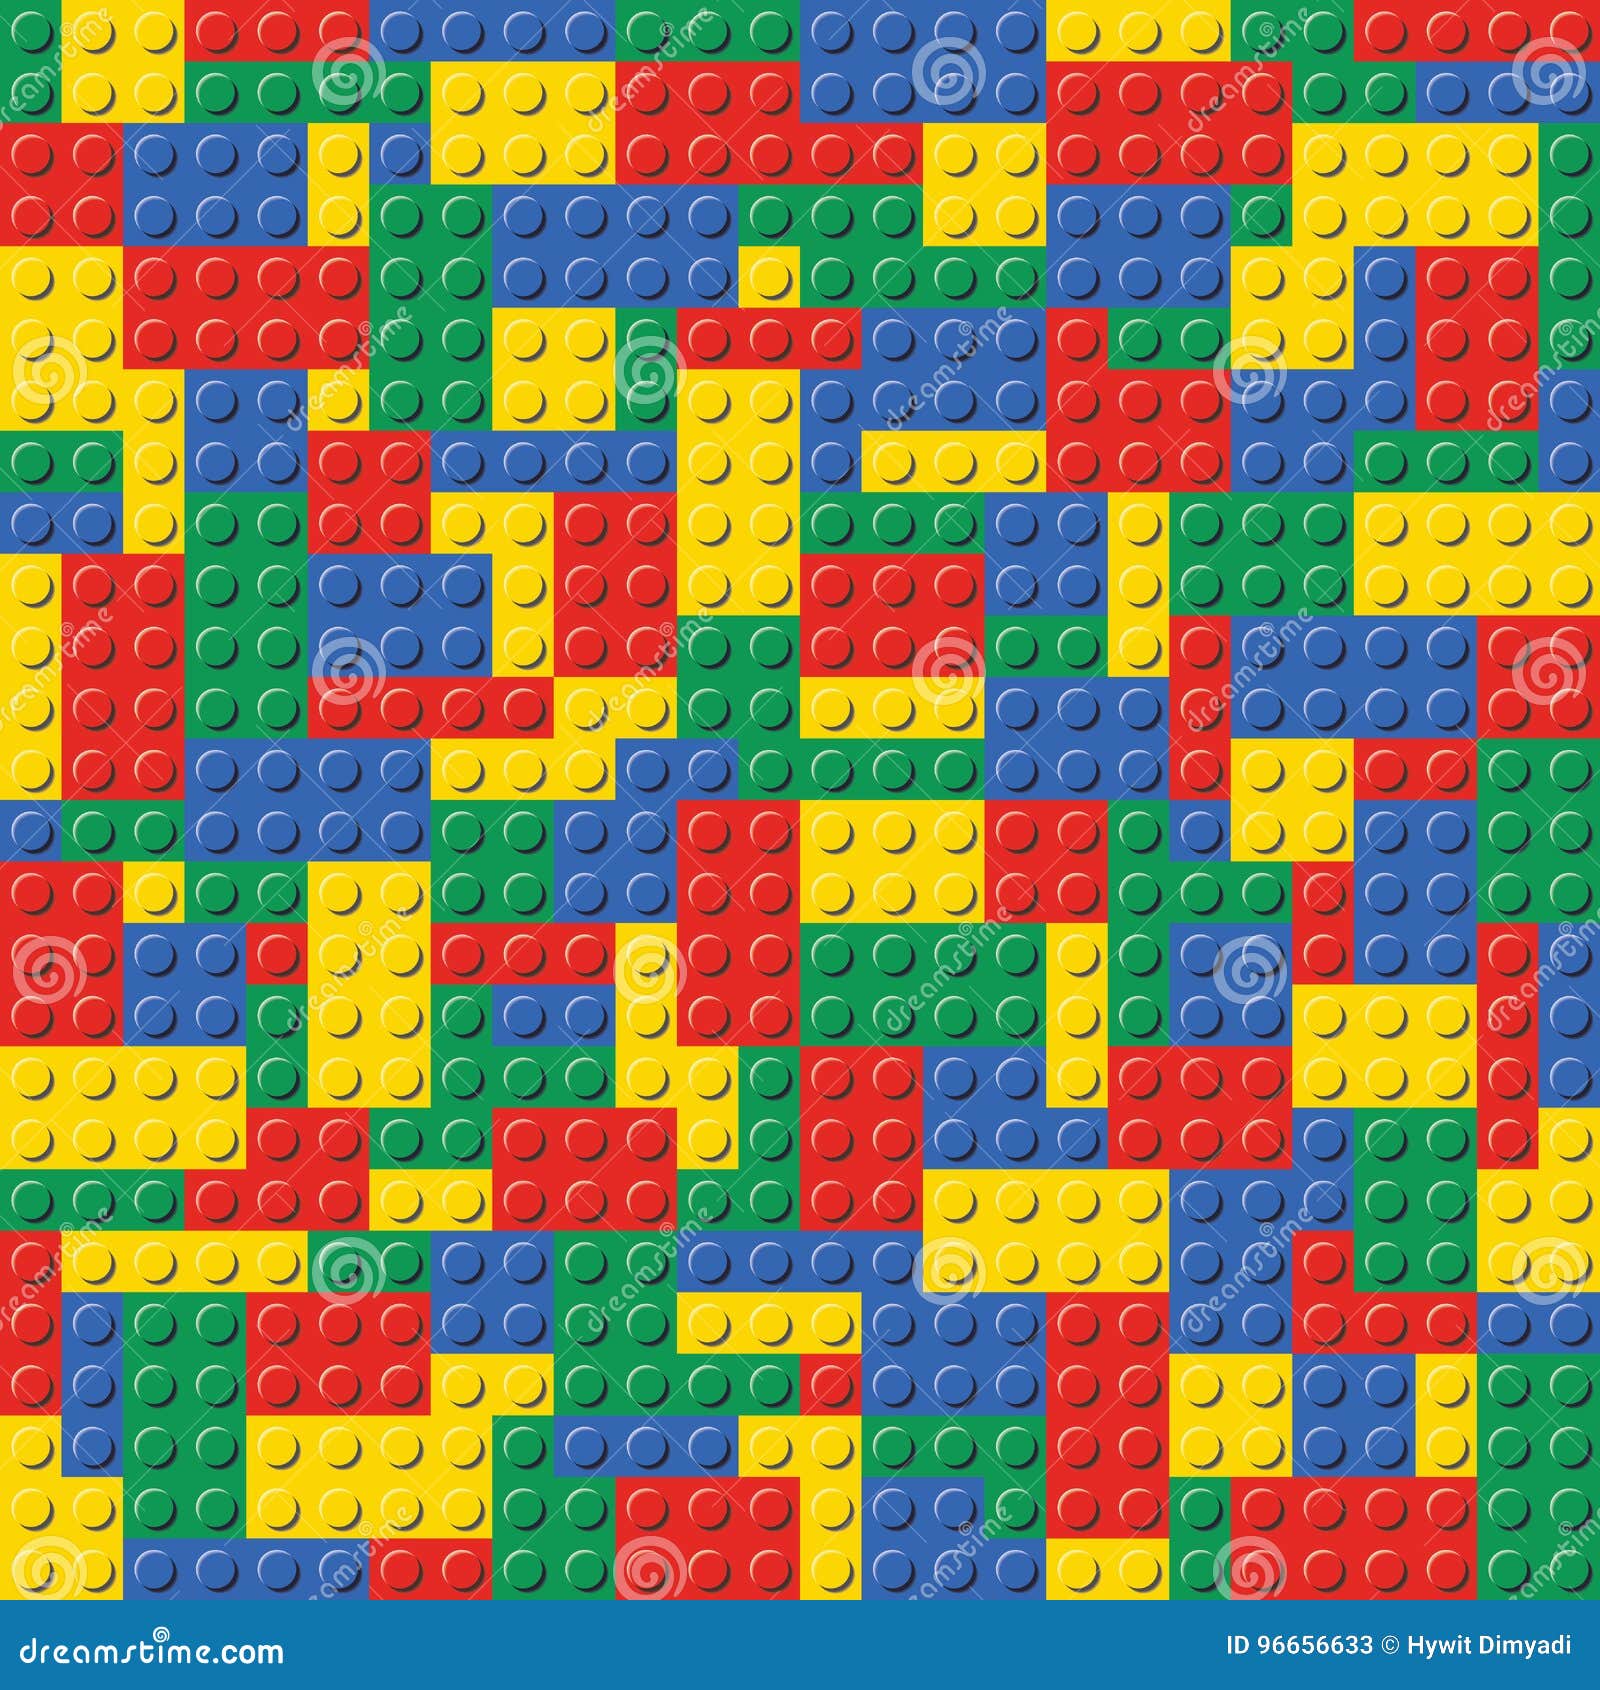 Lego Wall Texture